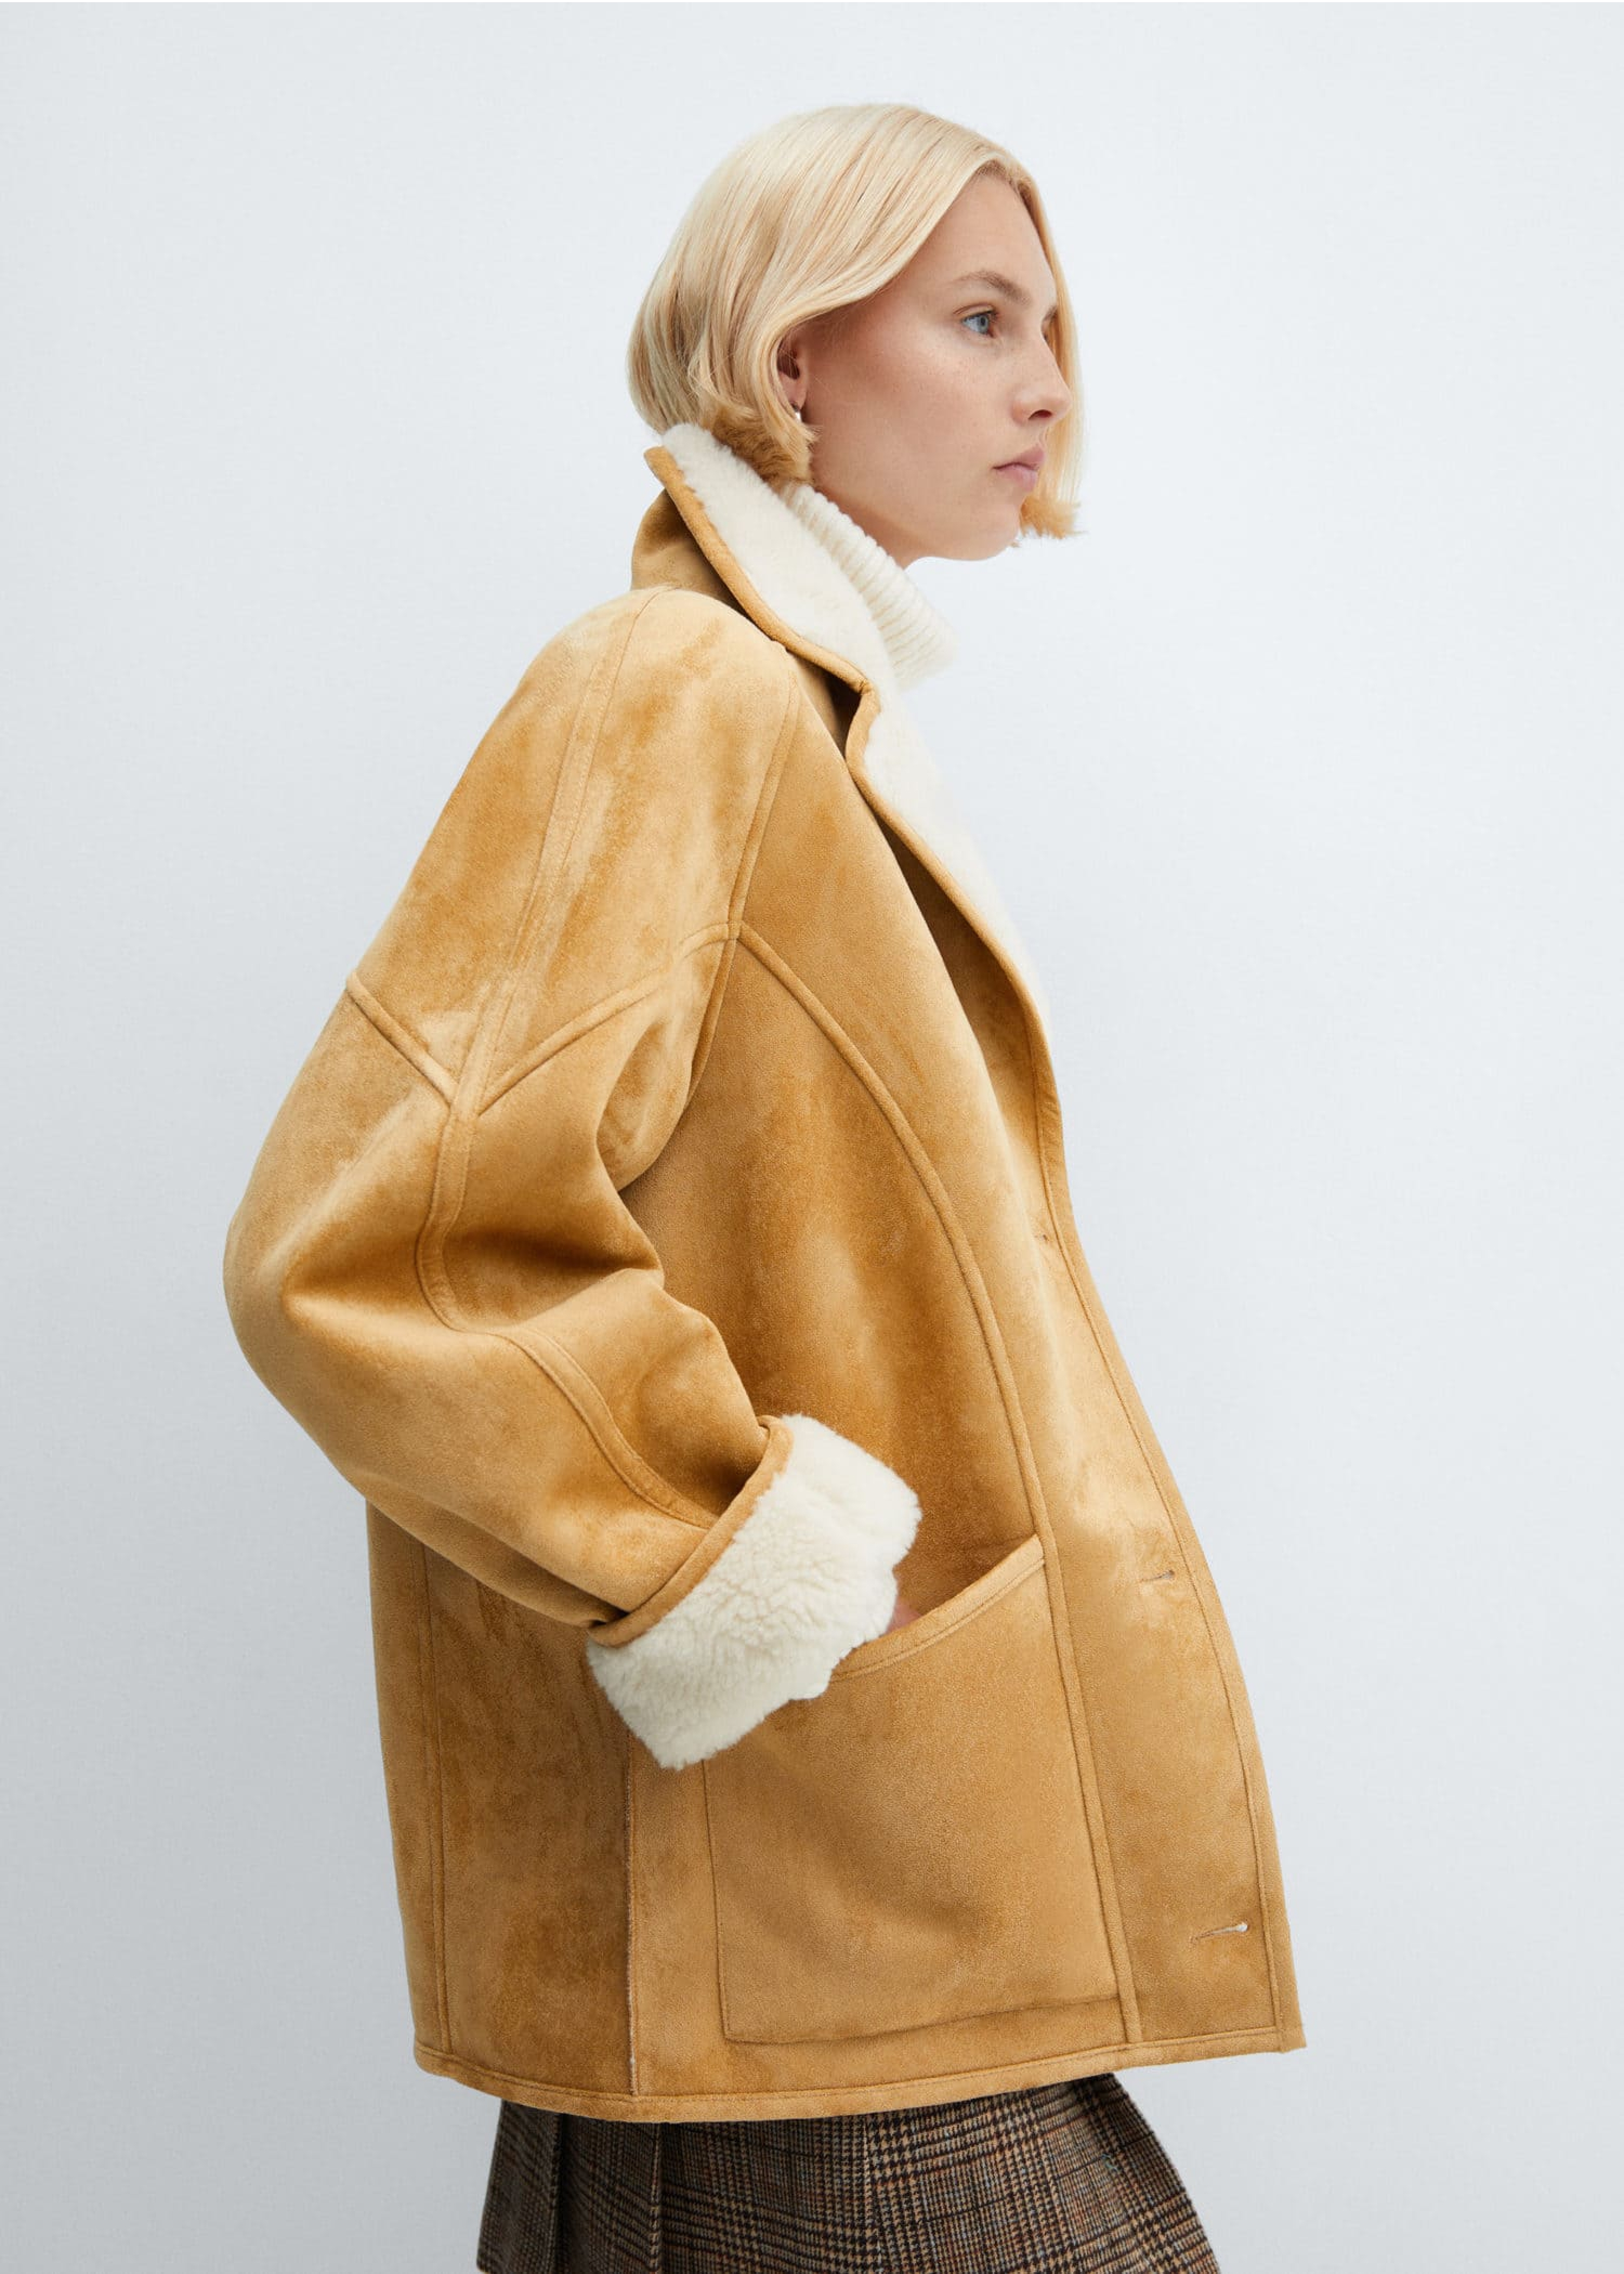 Mujer usando un abrigo oversize color camel con pelo blanco